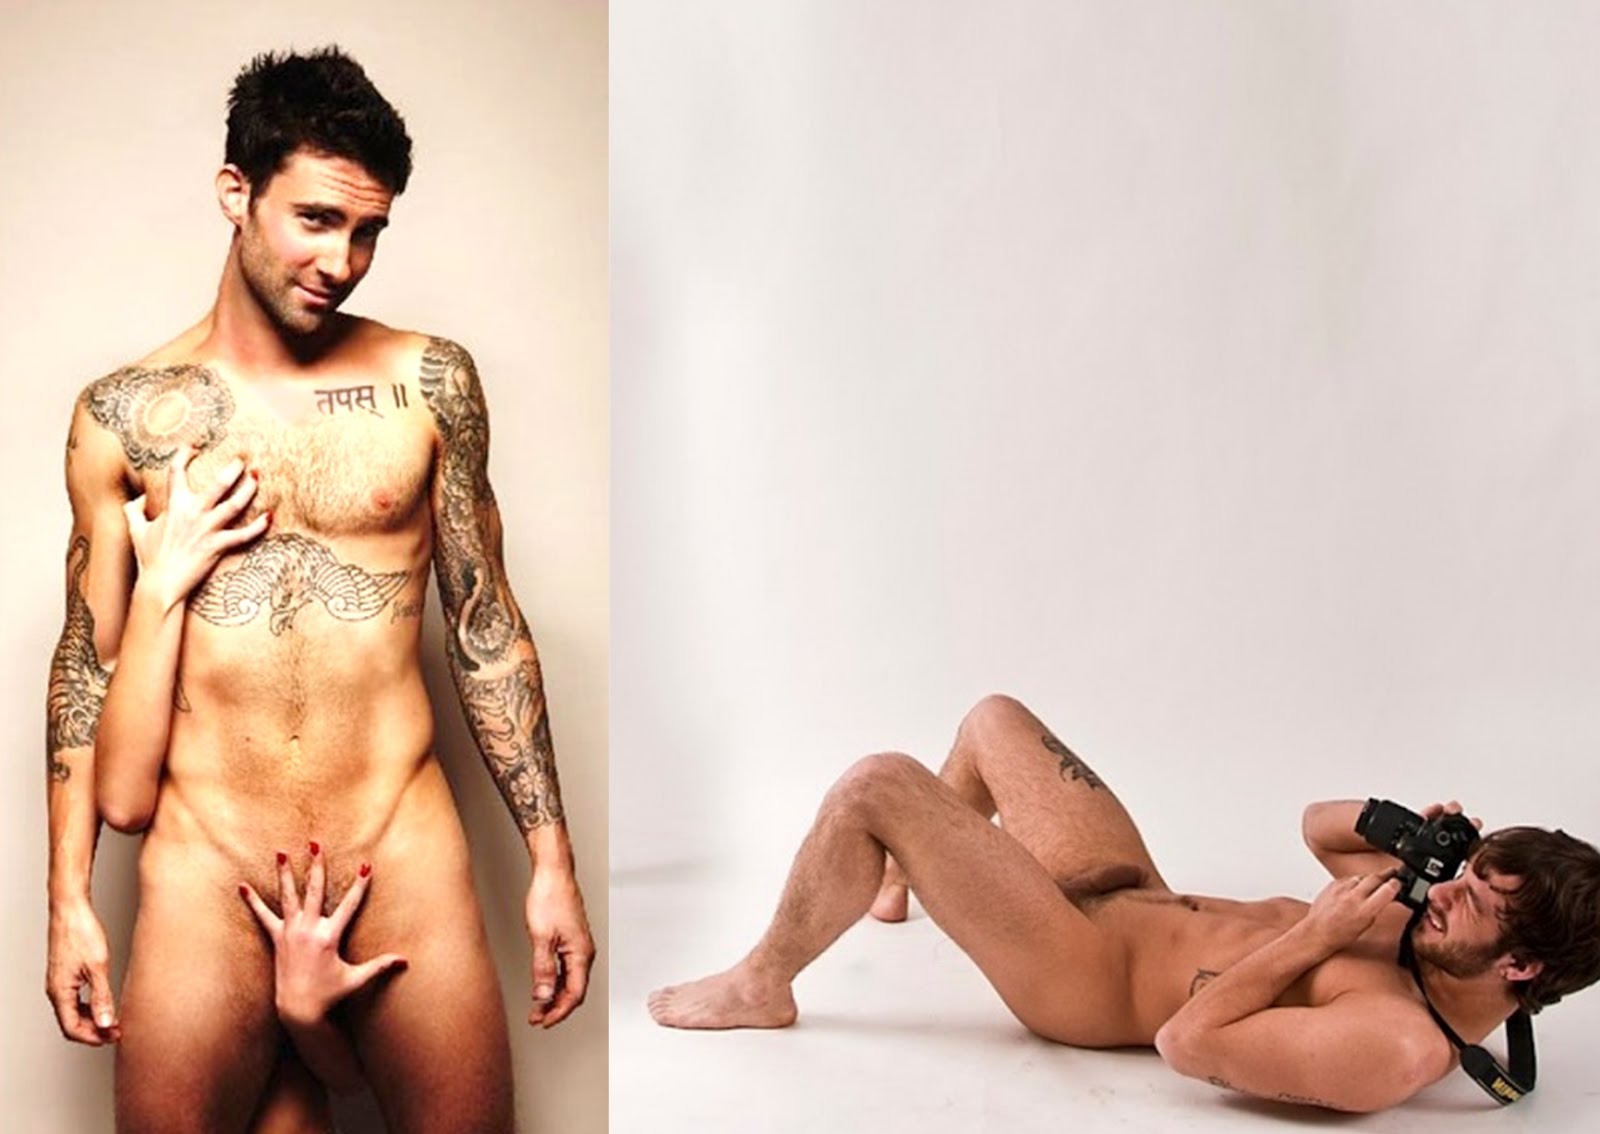 Adam Lambert hot athletes body, bare image